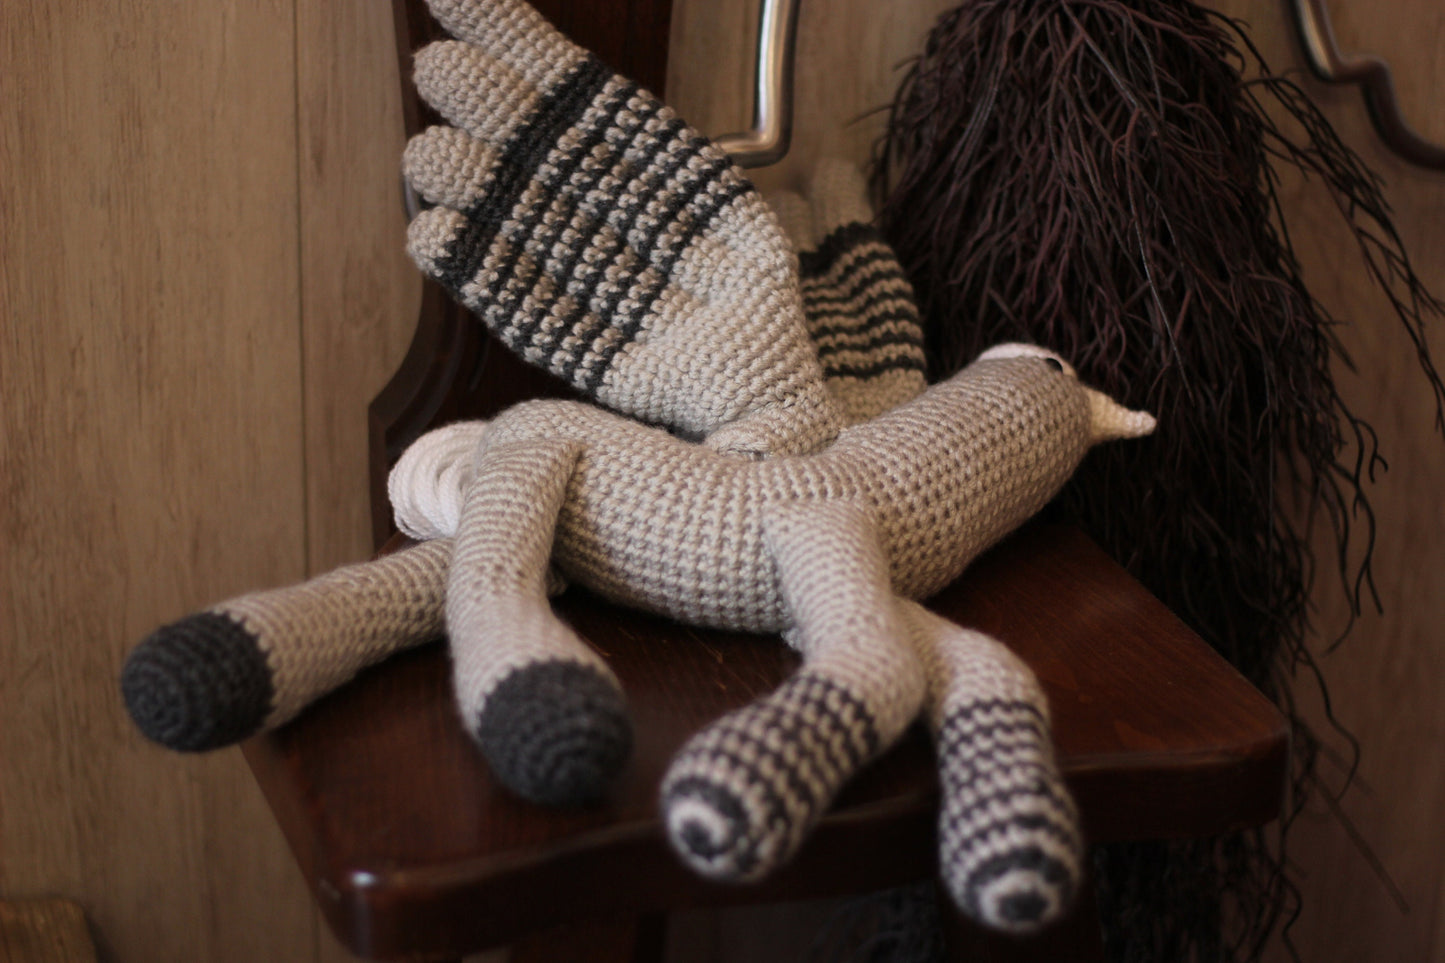 Hippogriff baby toy crochet amigurumi handmade